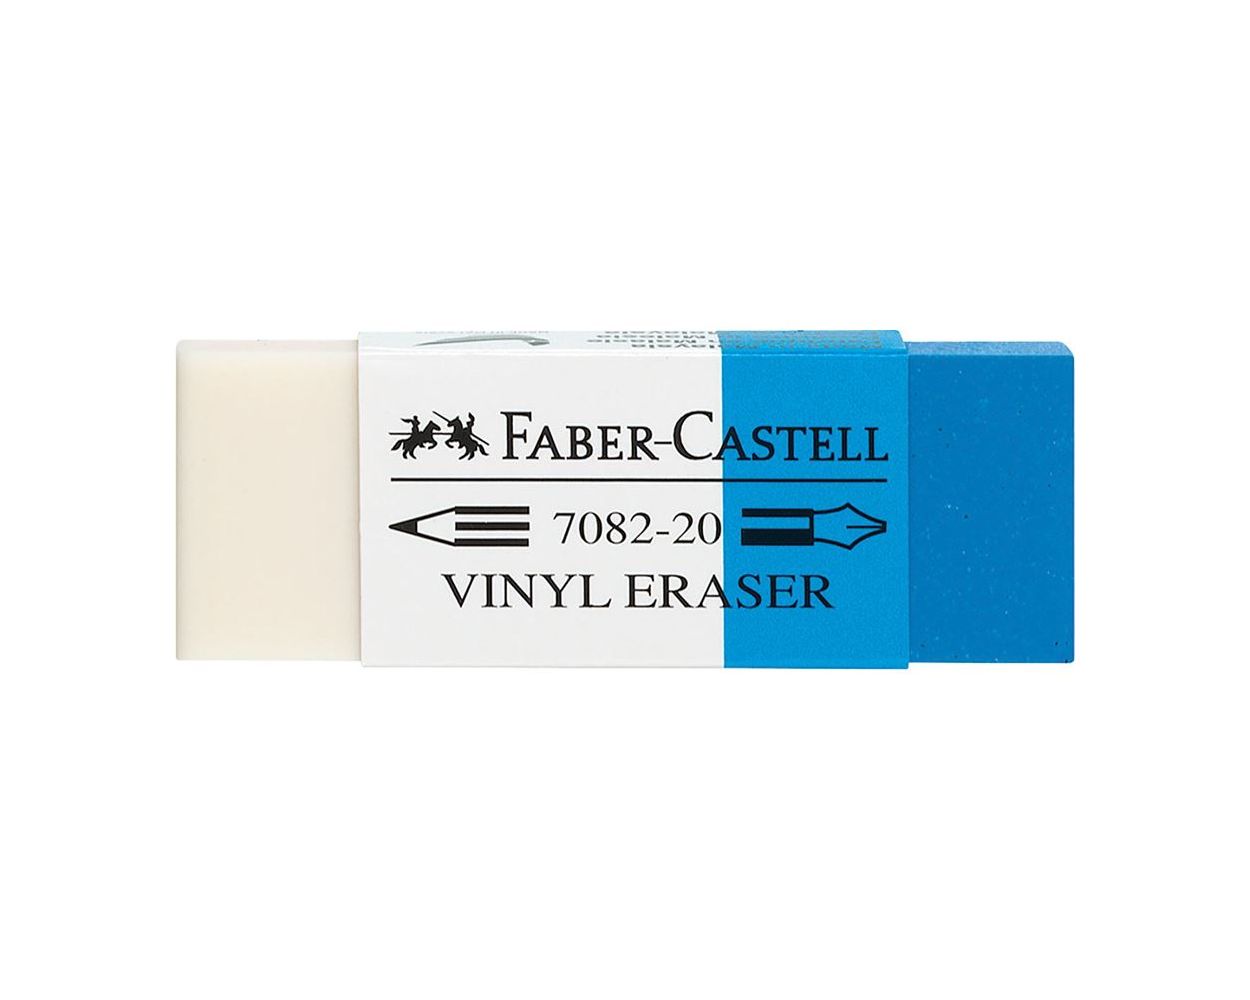 Faber Castell Vinyl Eraser